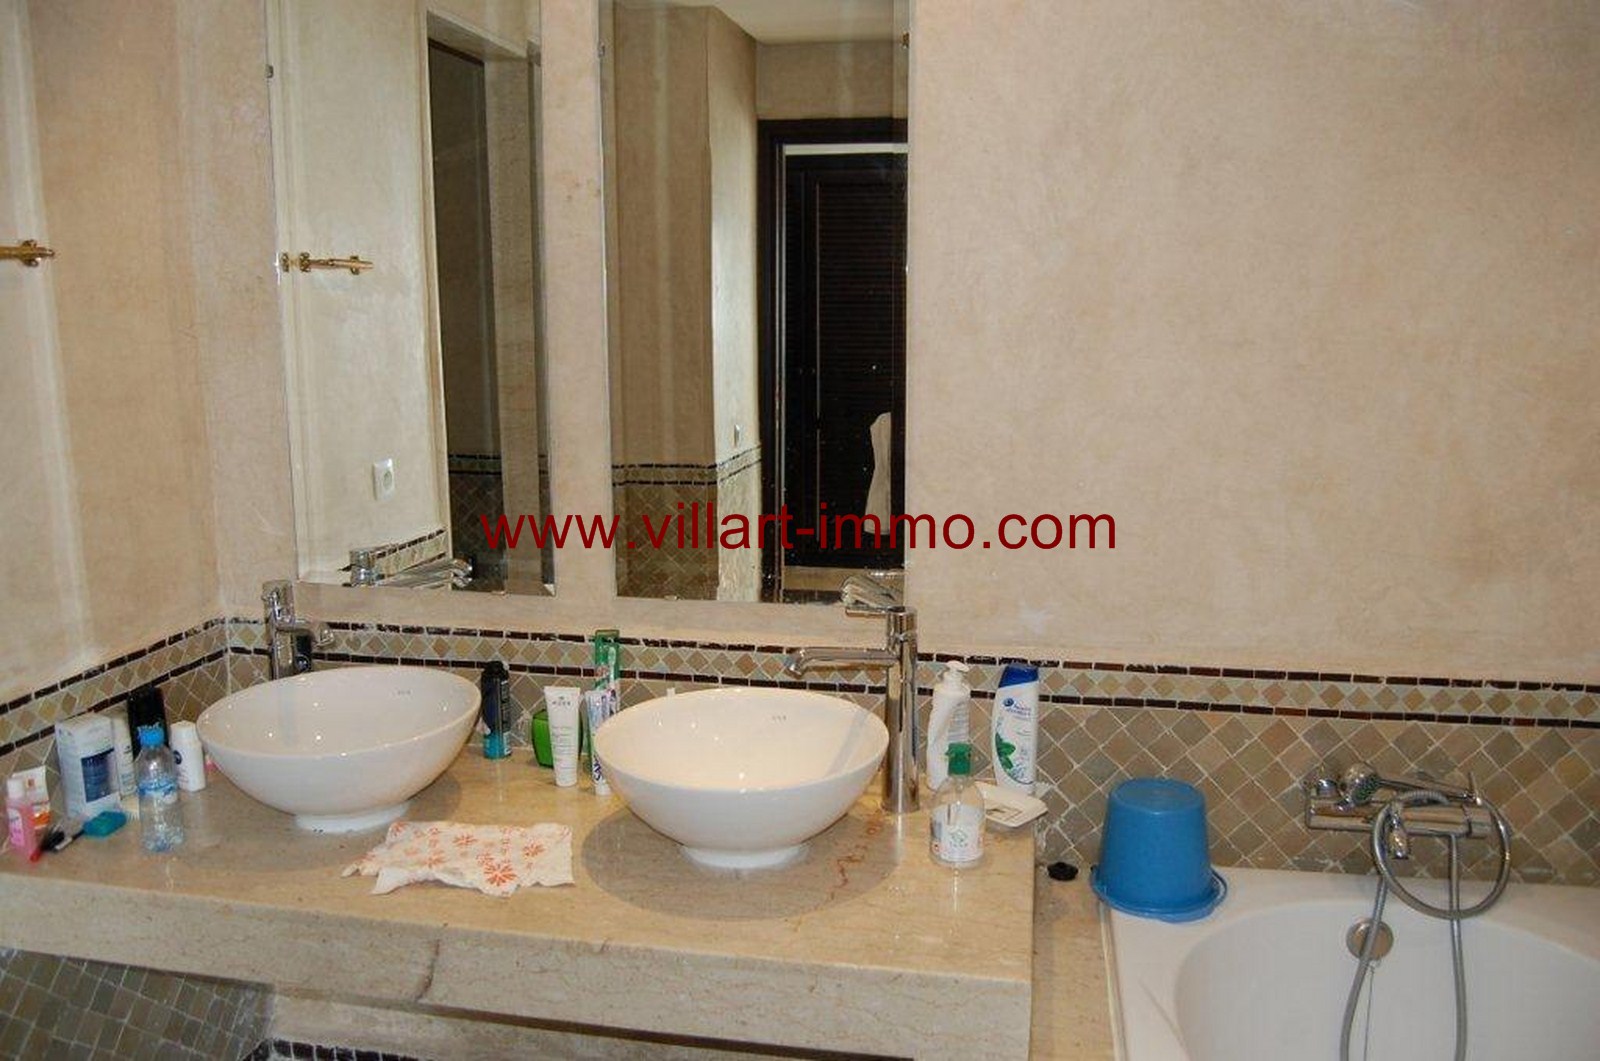 9-For-Sale-Villa-Tangier-Malabata-Bathroom 2-VV354-Villart Immo